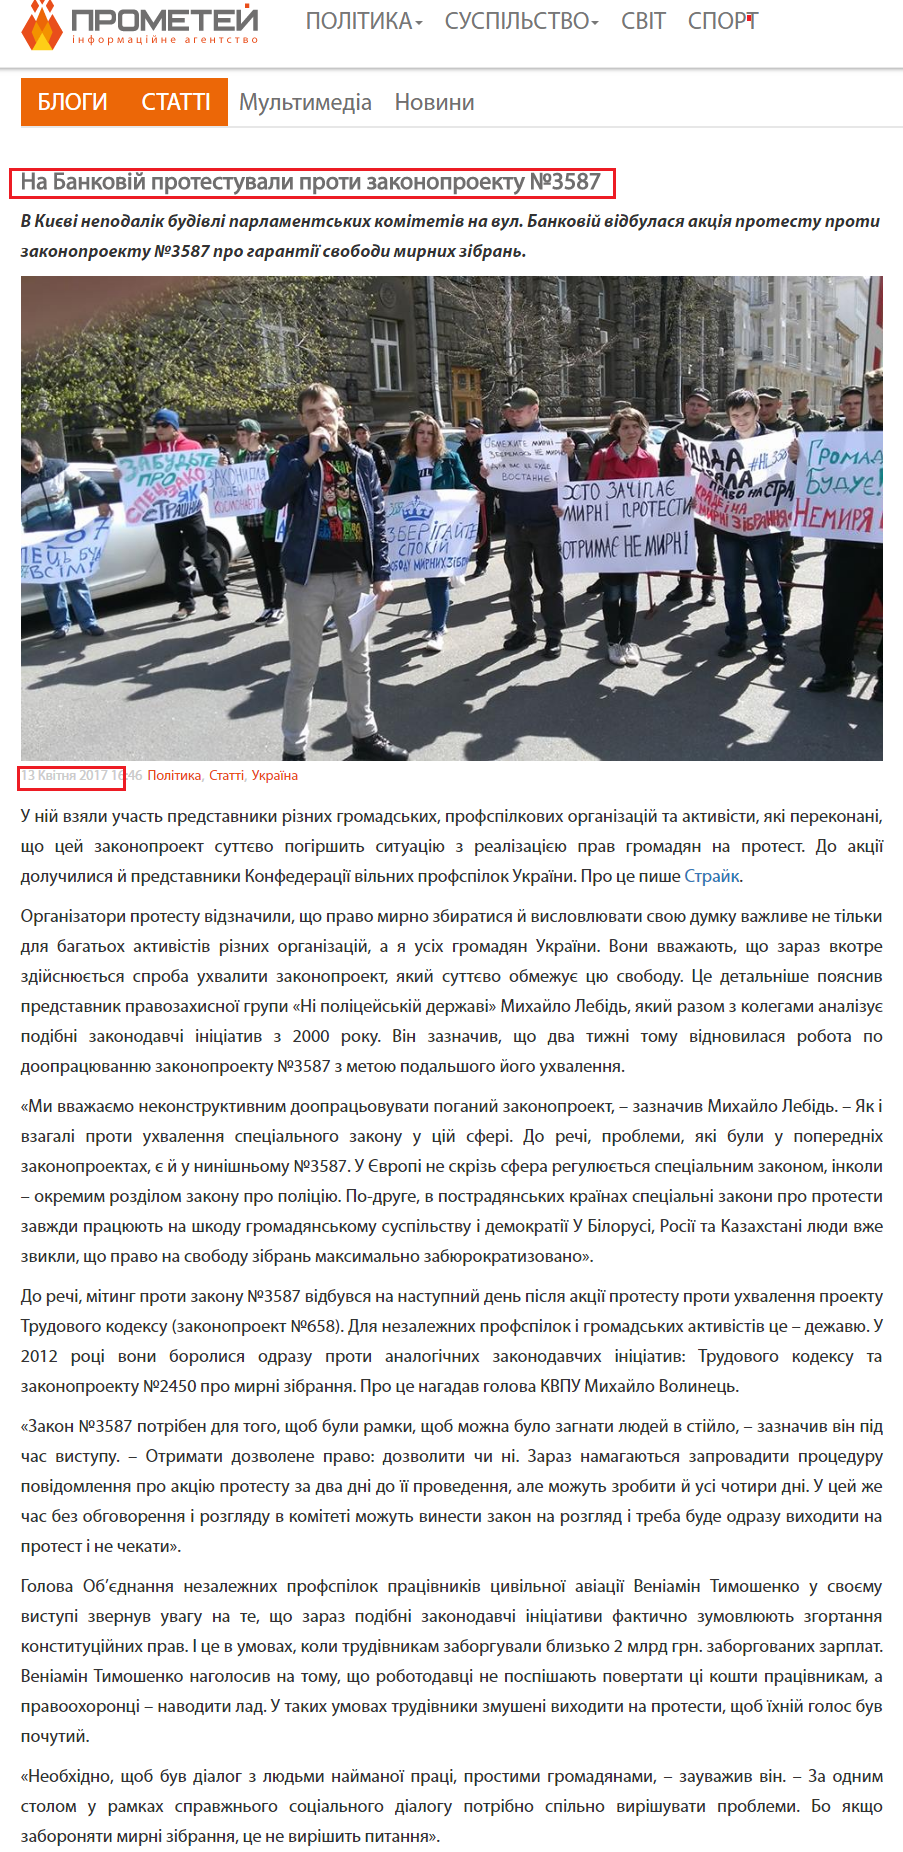 http://prometei.org/polityka/na-bankovij-protestuvaly-proty-zakonoproektu-3587/